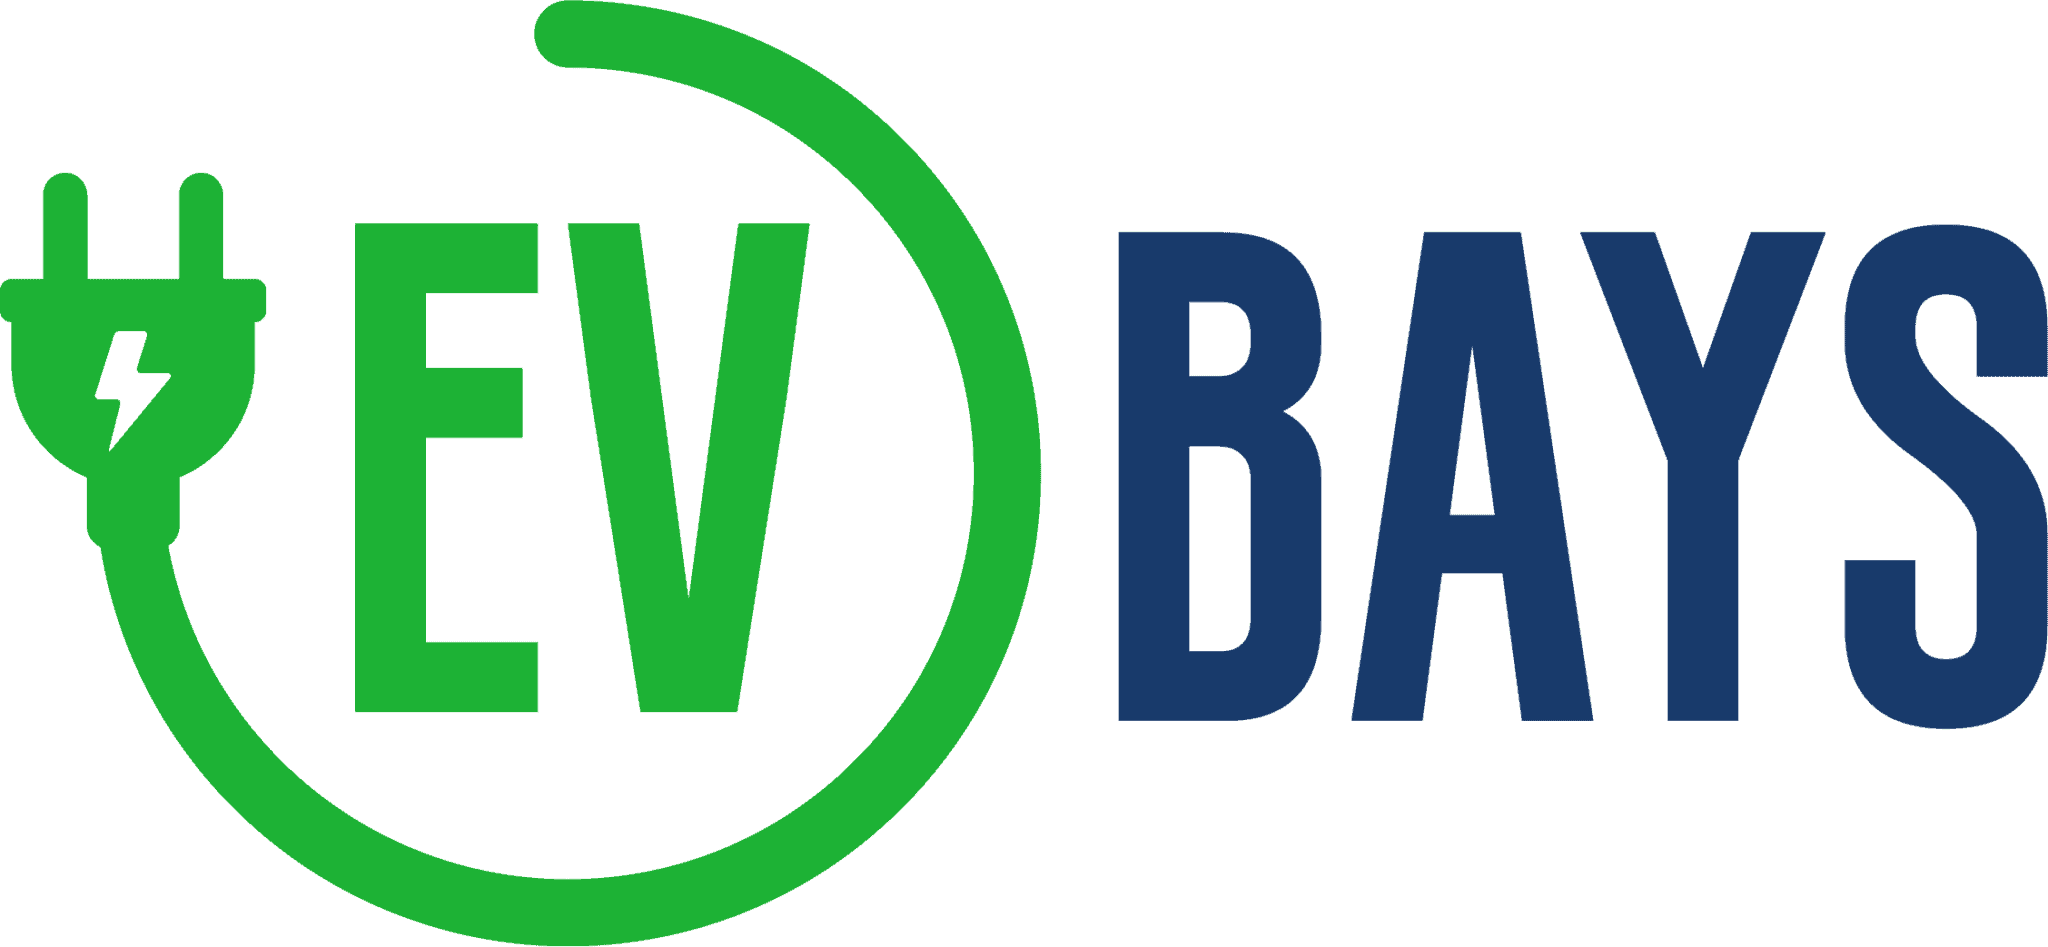 EV Bays